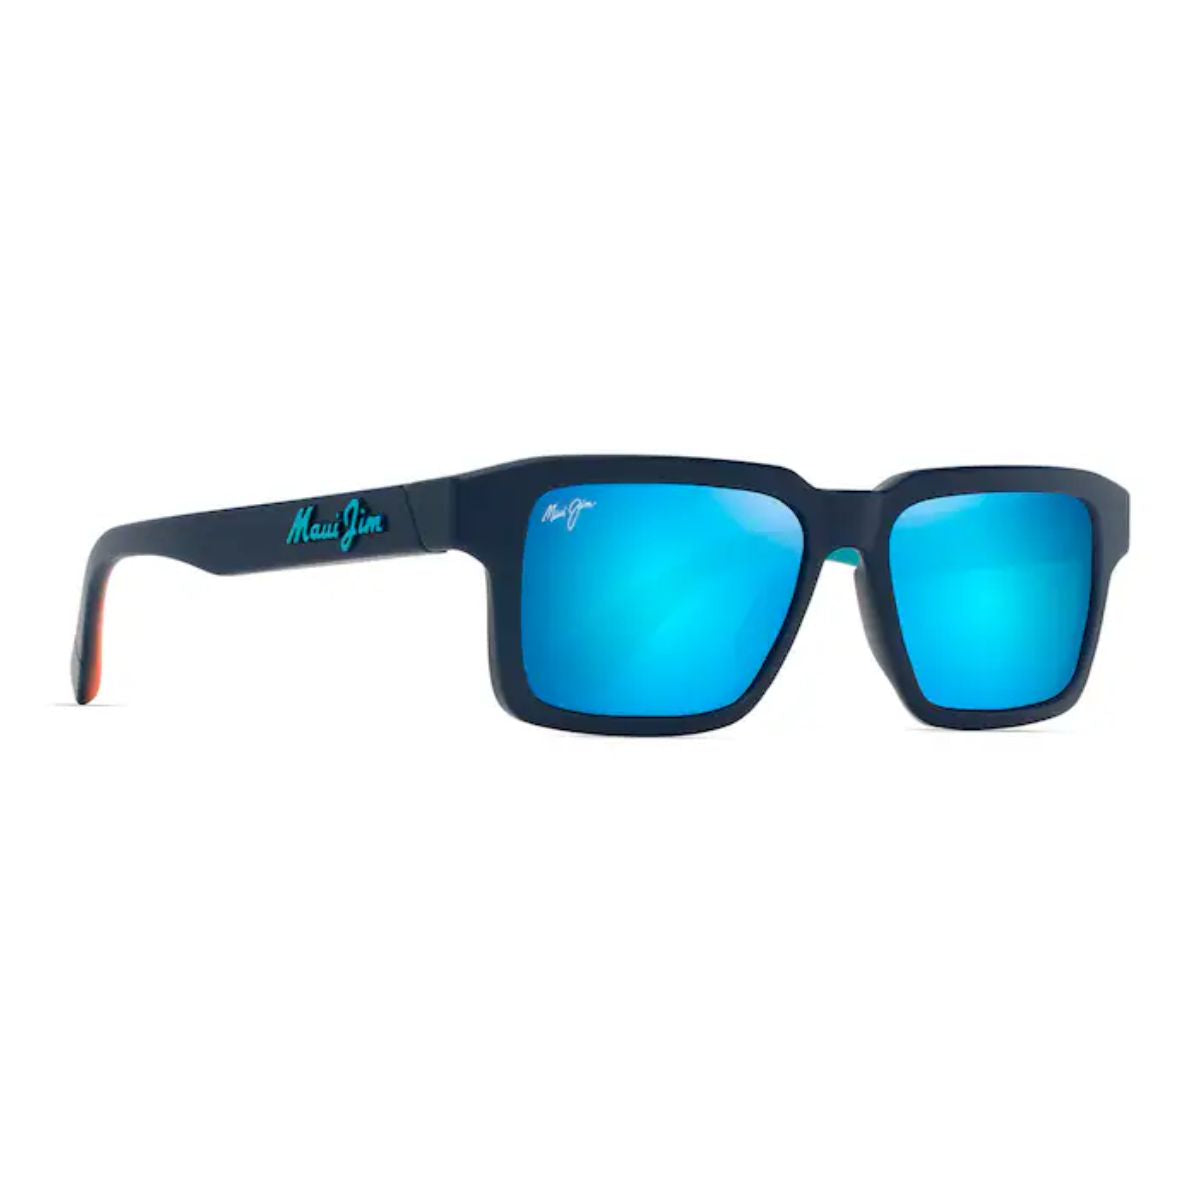 "Shop Maui Jim Square Polarized Sunglasses For Mens At Optorium"